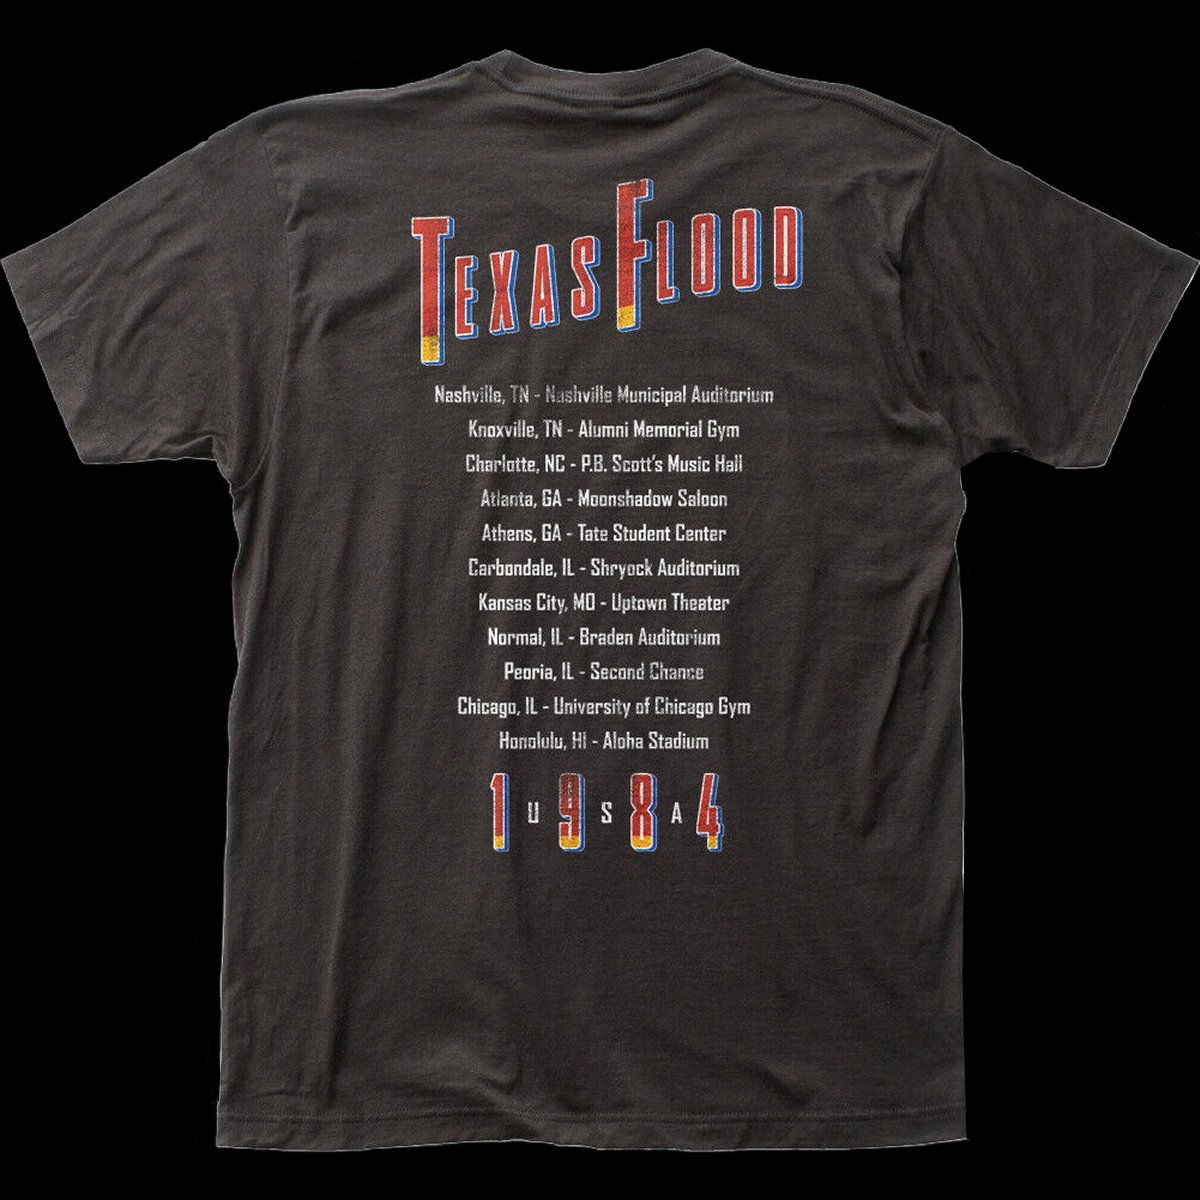 Texas Flood Tour T-Shirt